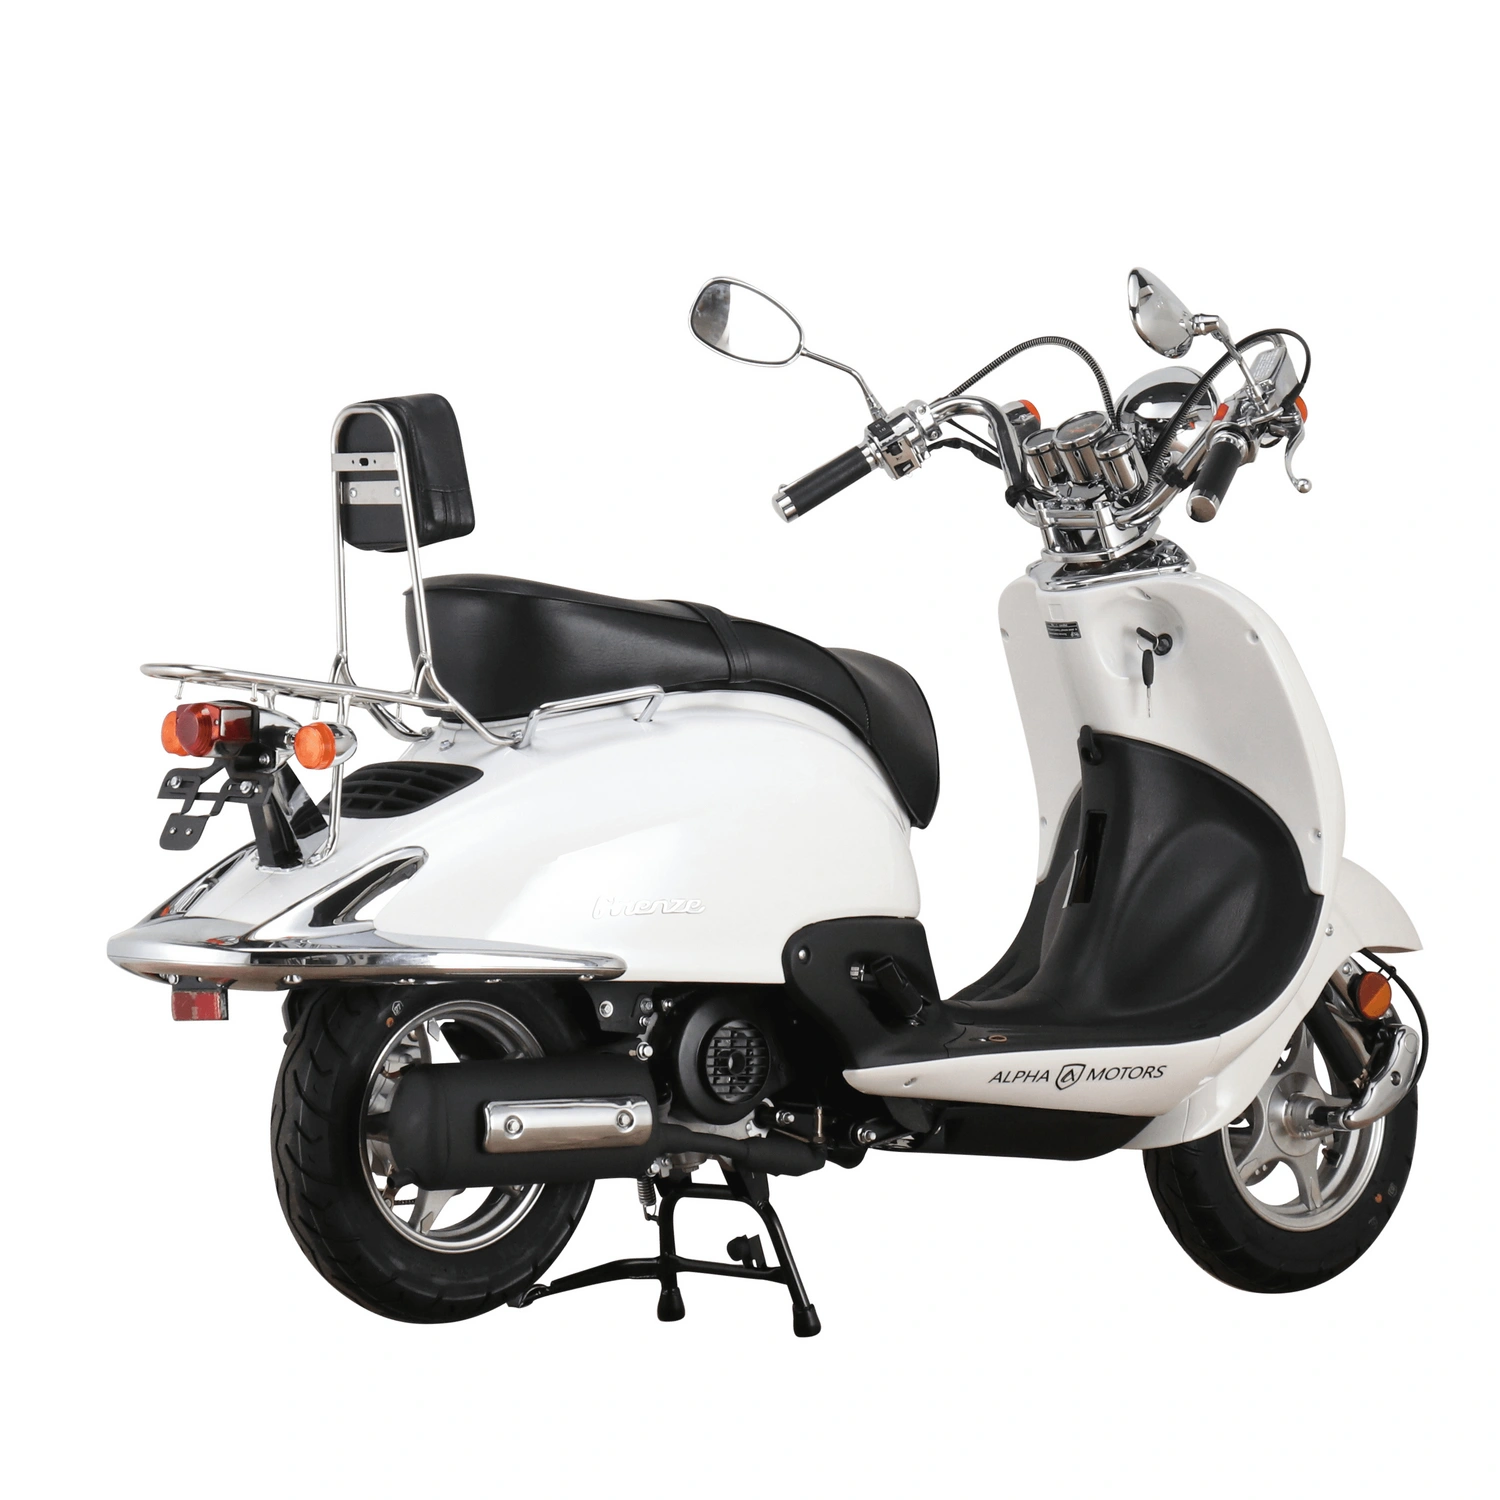 ALPHA MOTORS Motorroller »Firenze«, 50 cm³, 25km/h, Euro 5